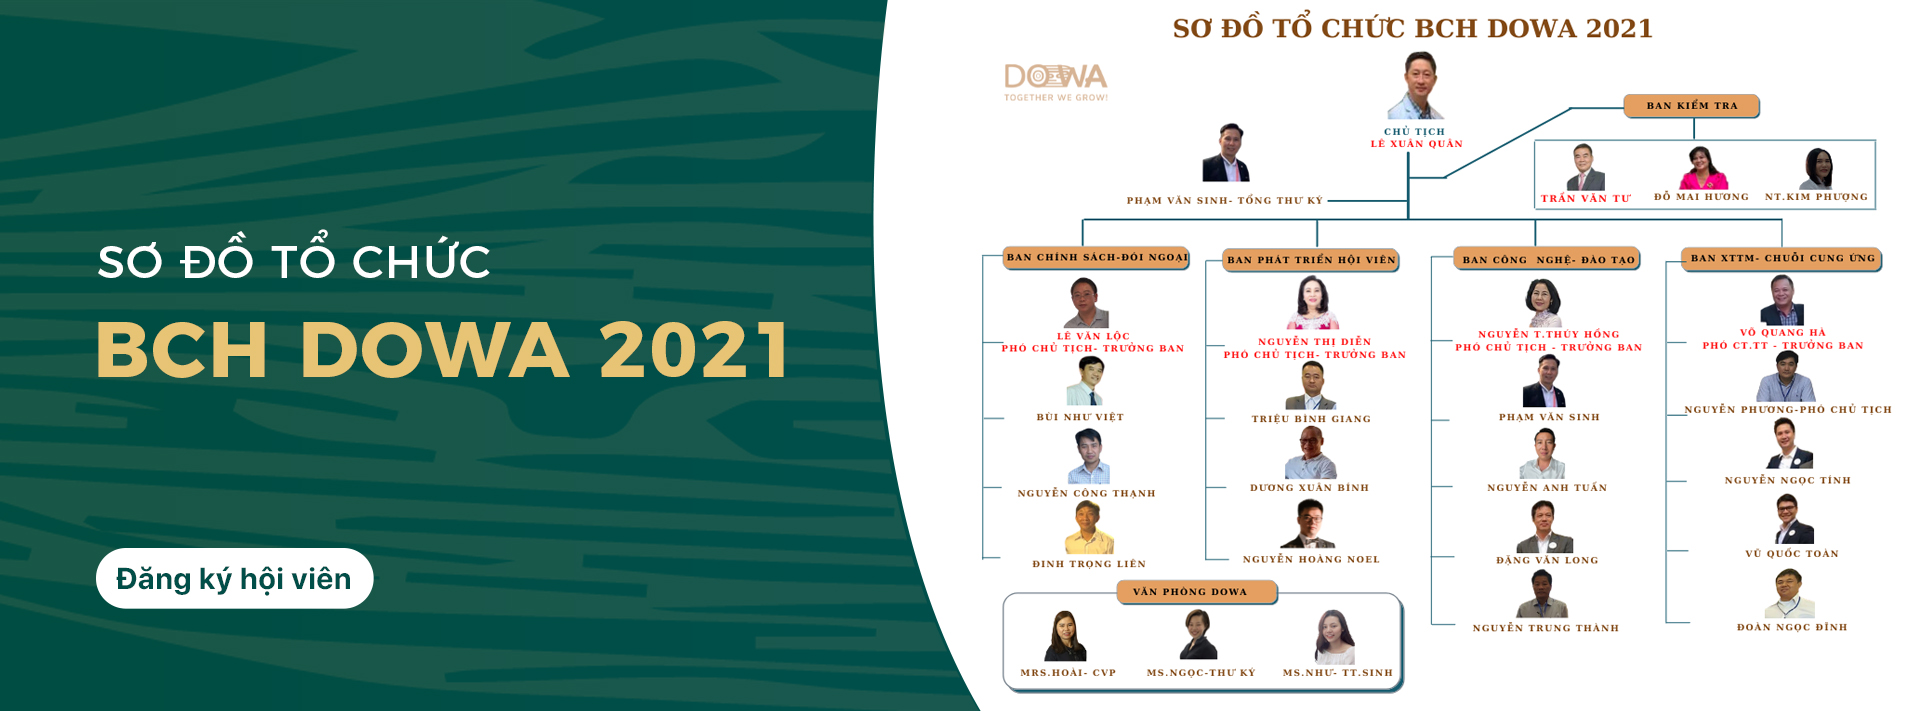 BCH Dowa 2021